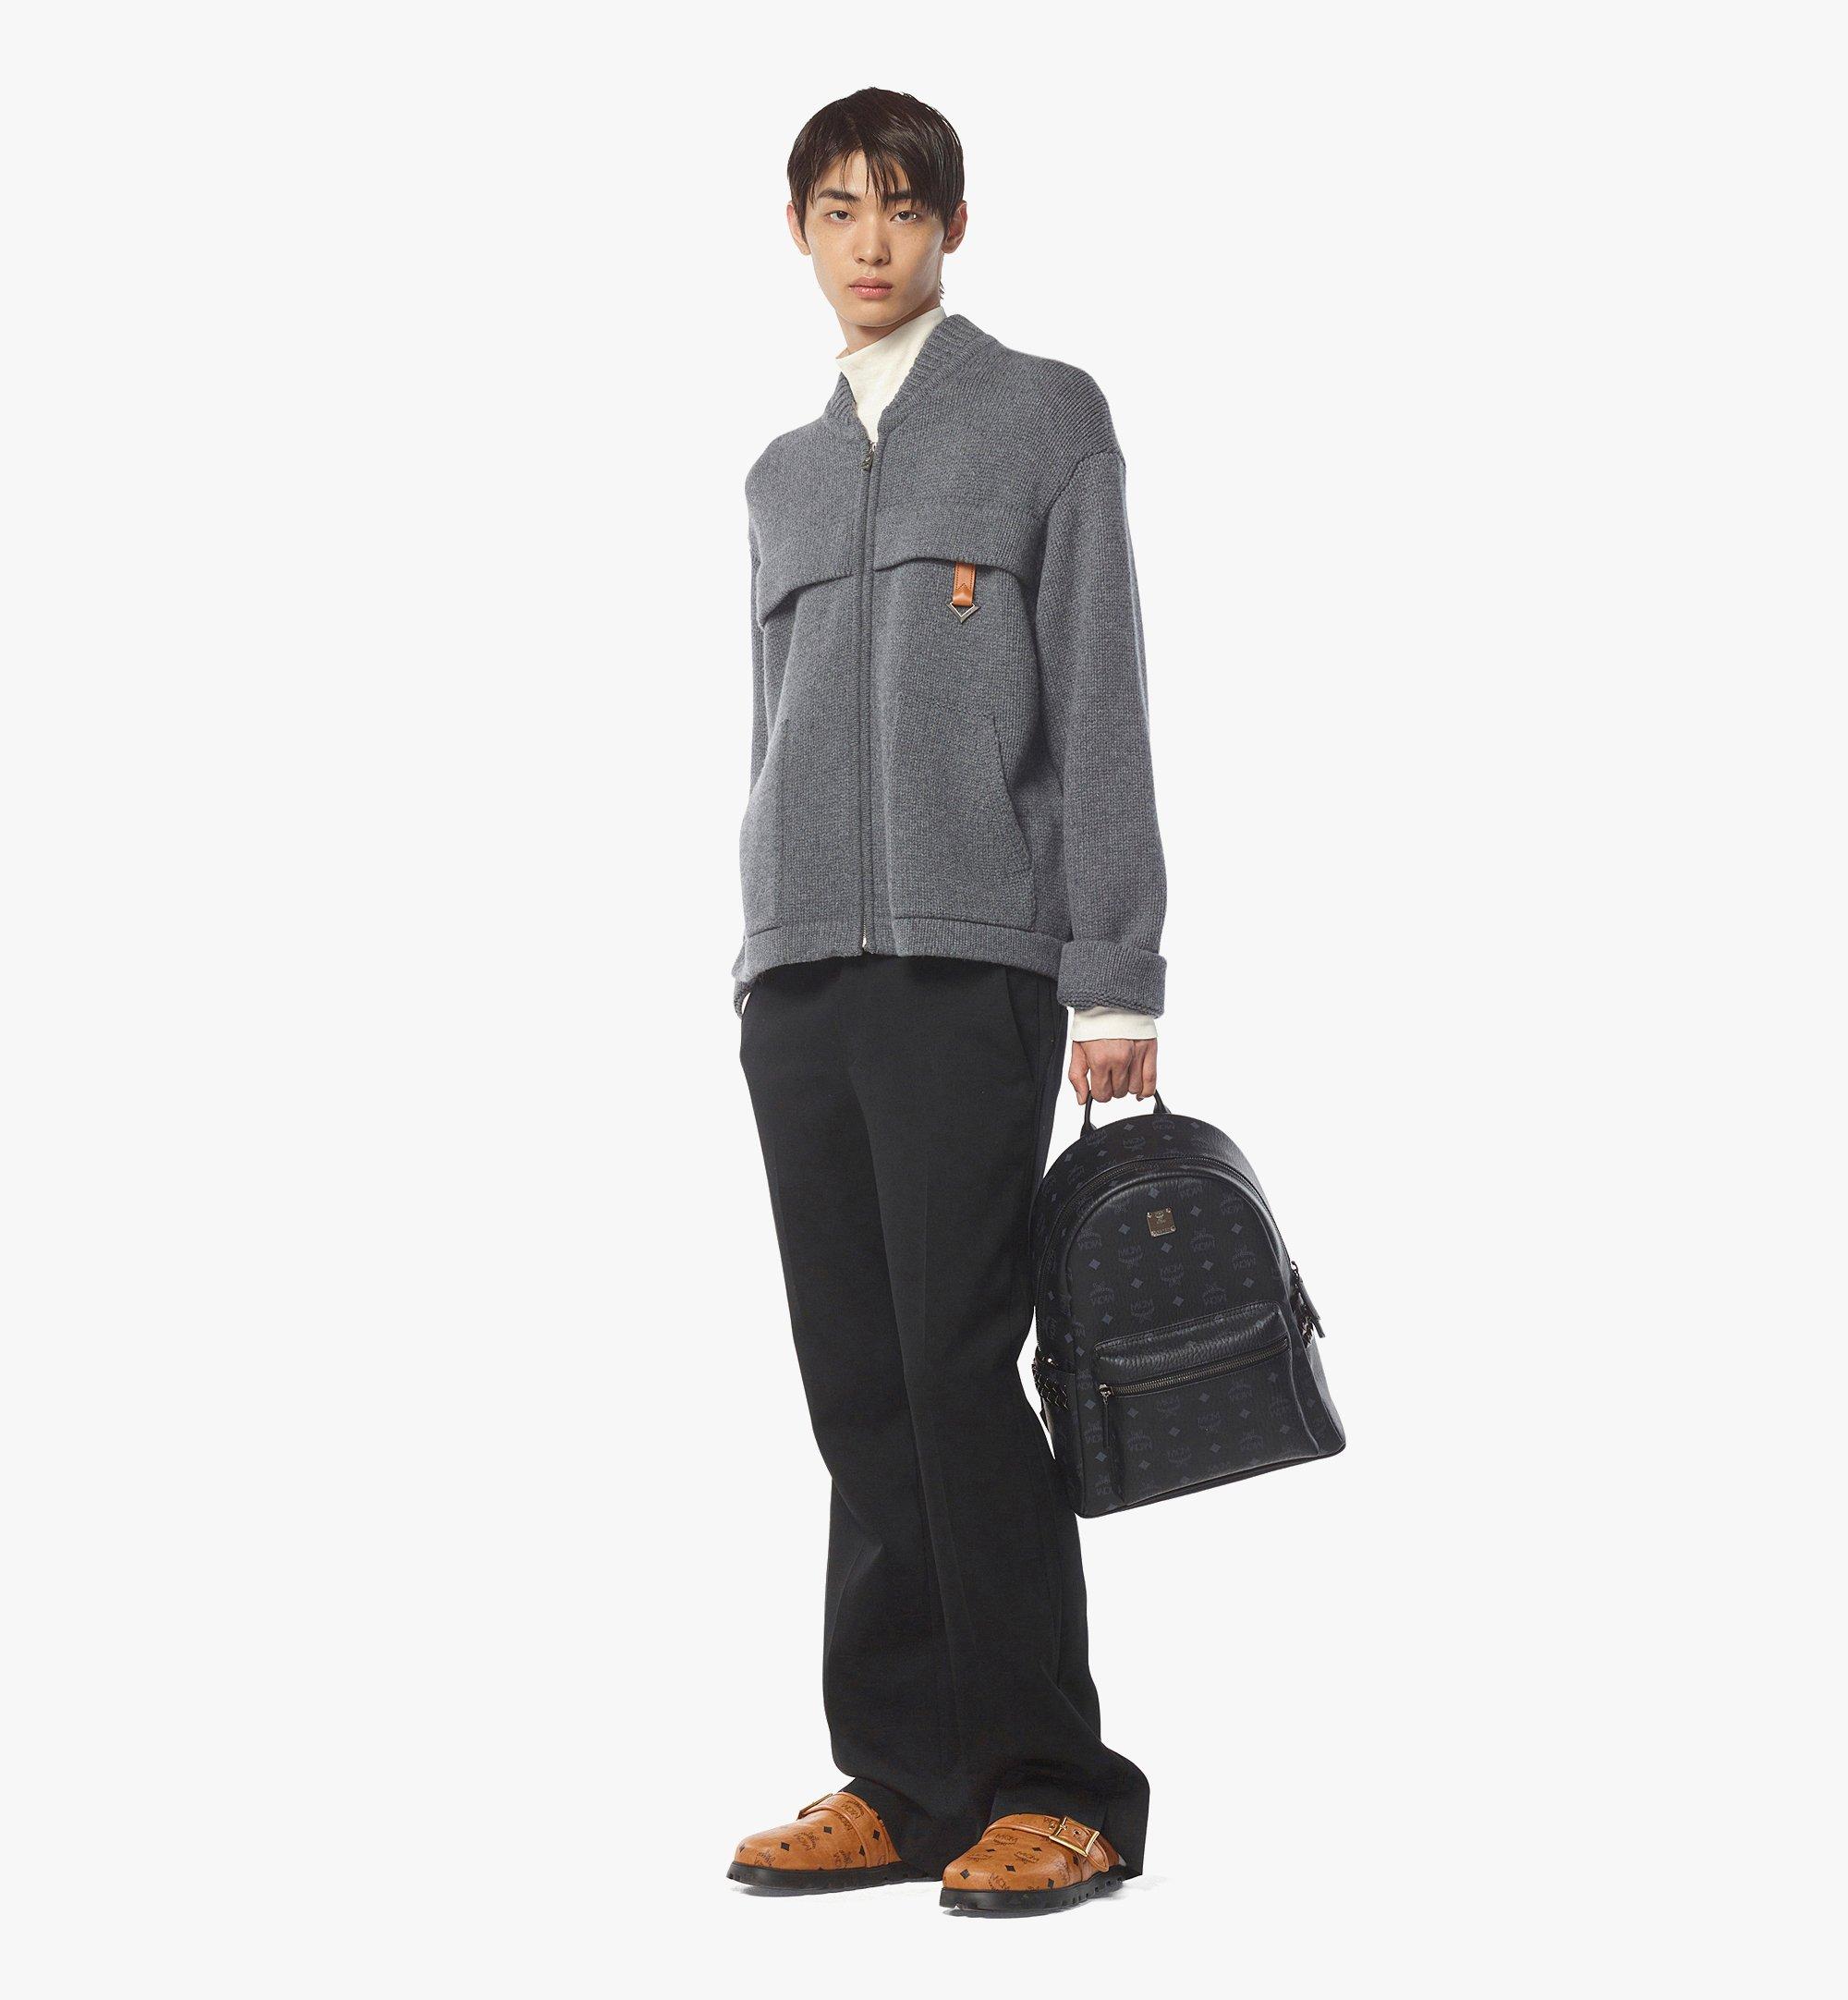 Small-Medium Stark Side Studs Backpack in Visetos Black | MCM ®US